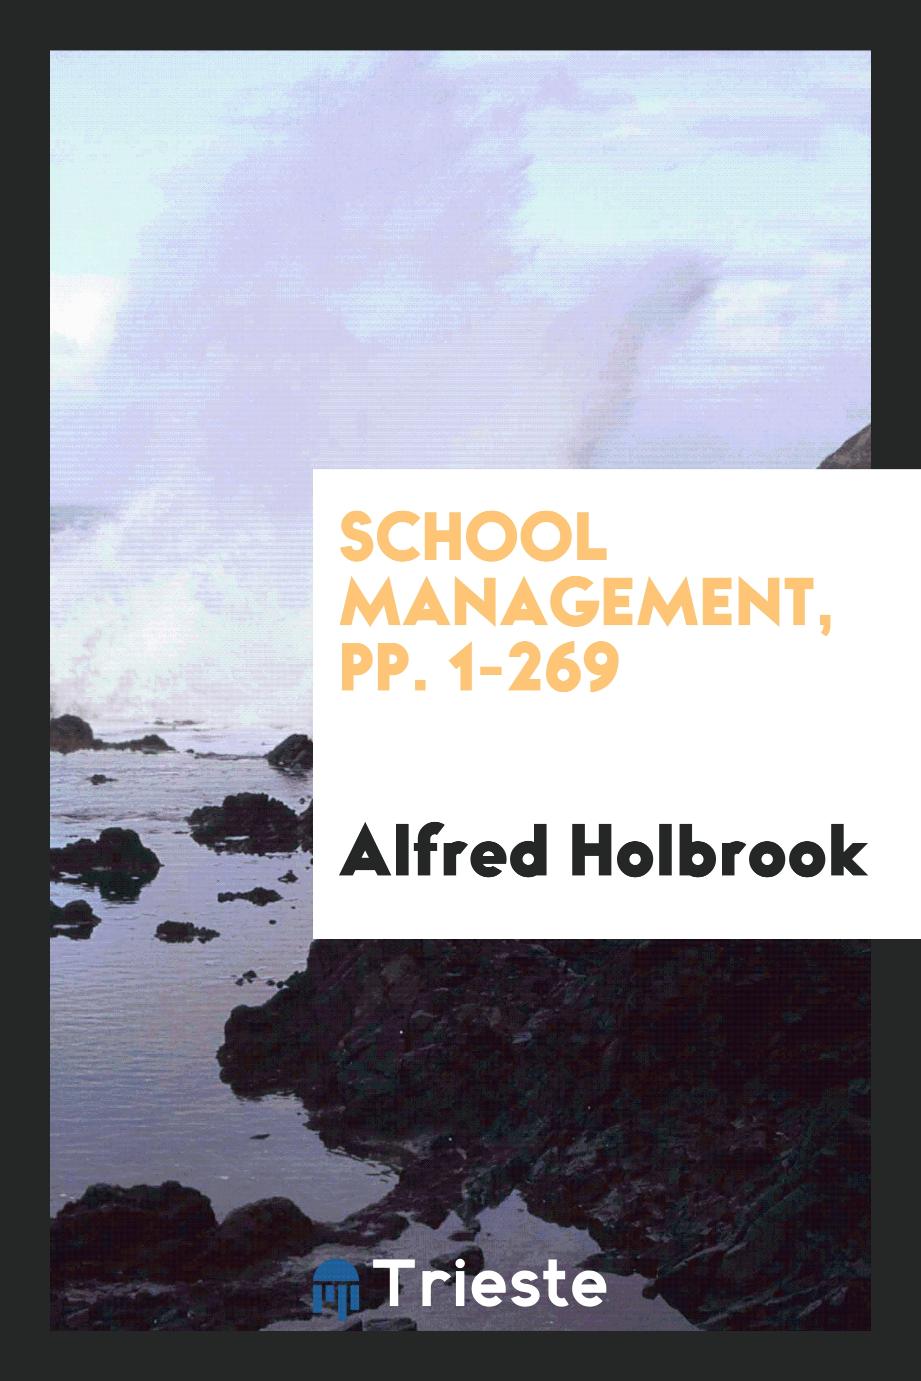 School Management, pp. 1-269